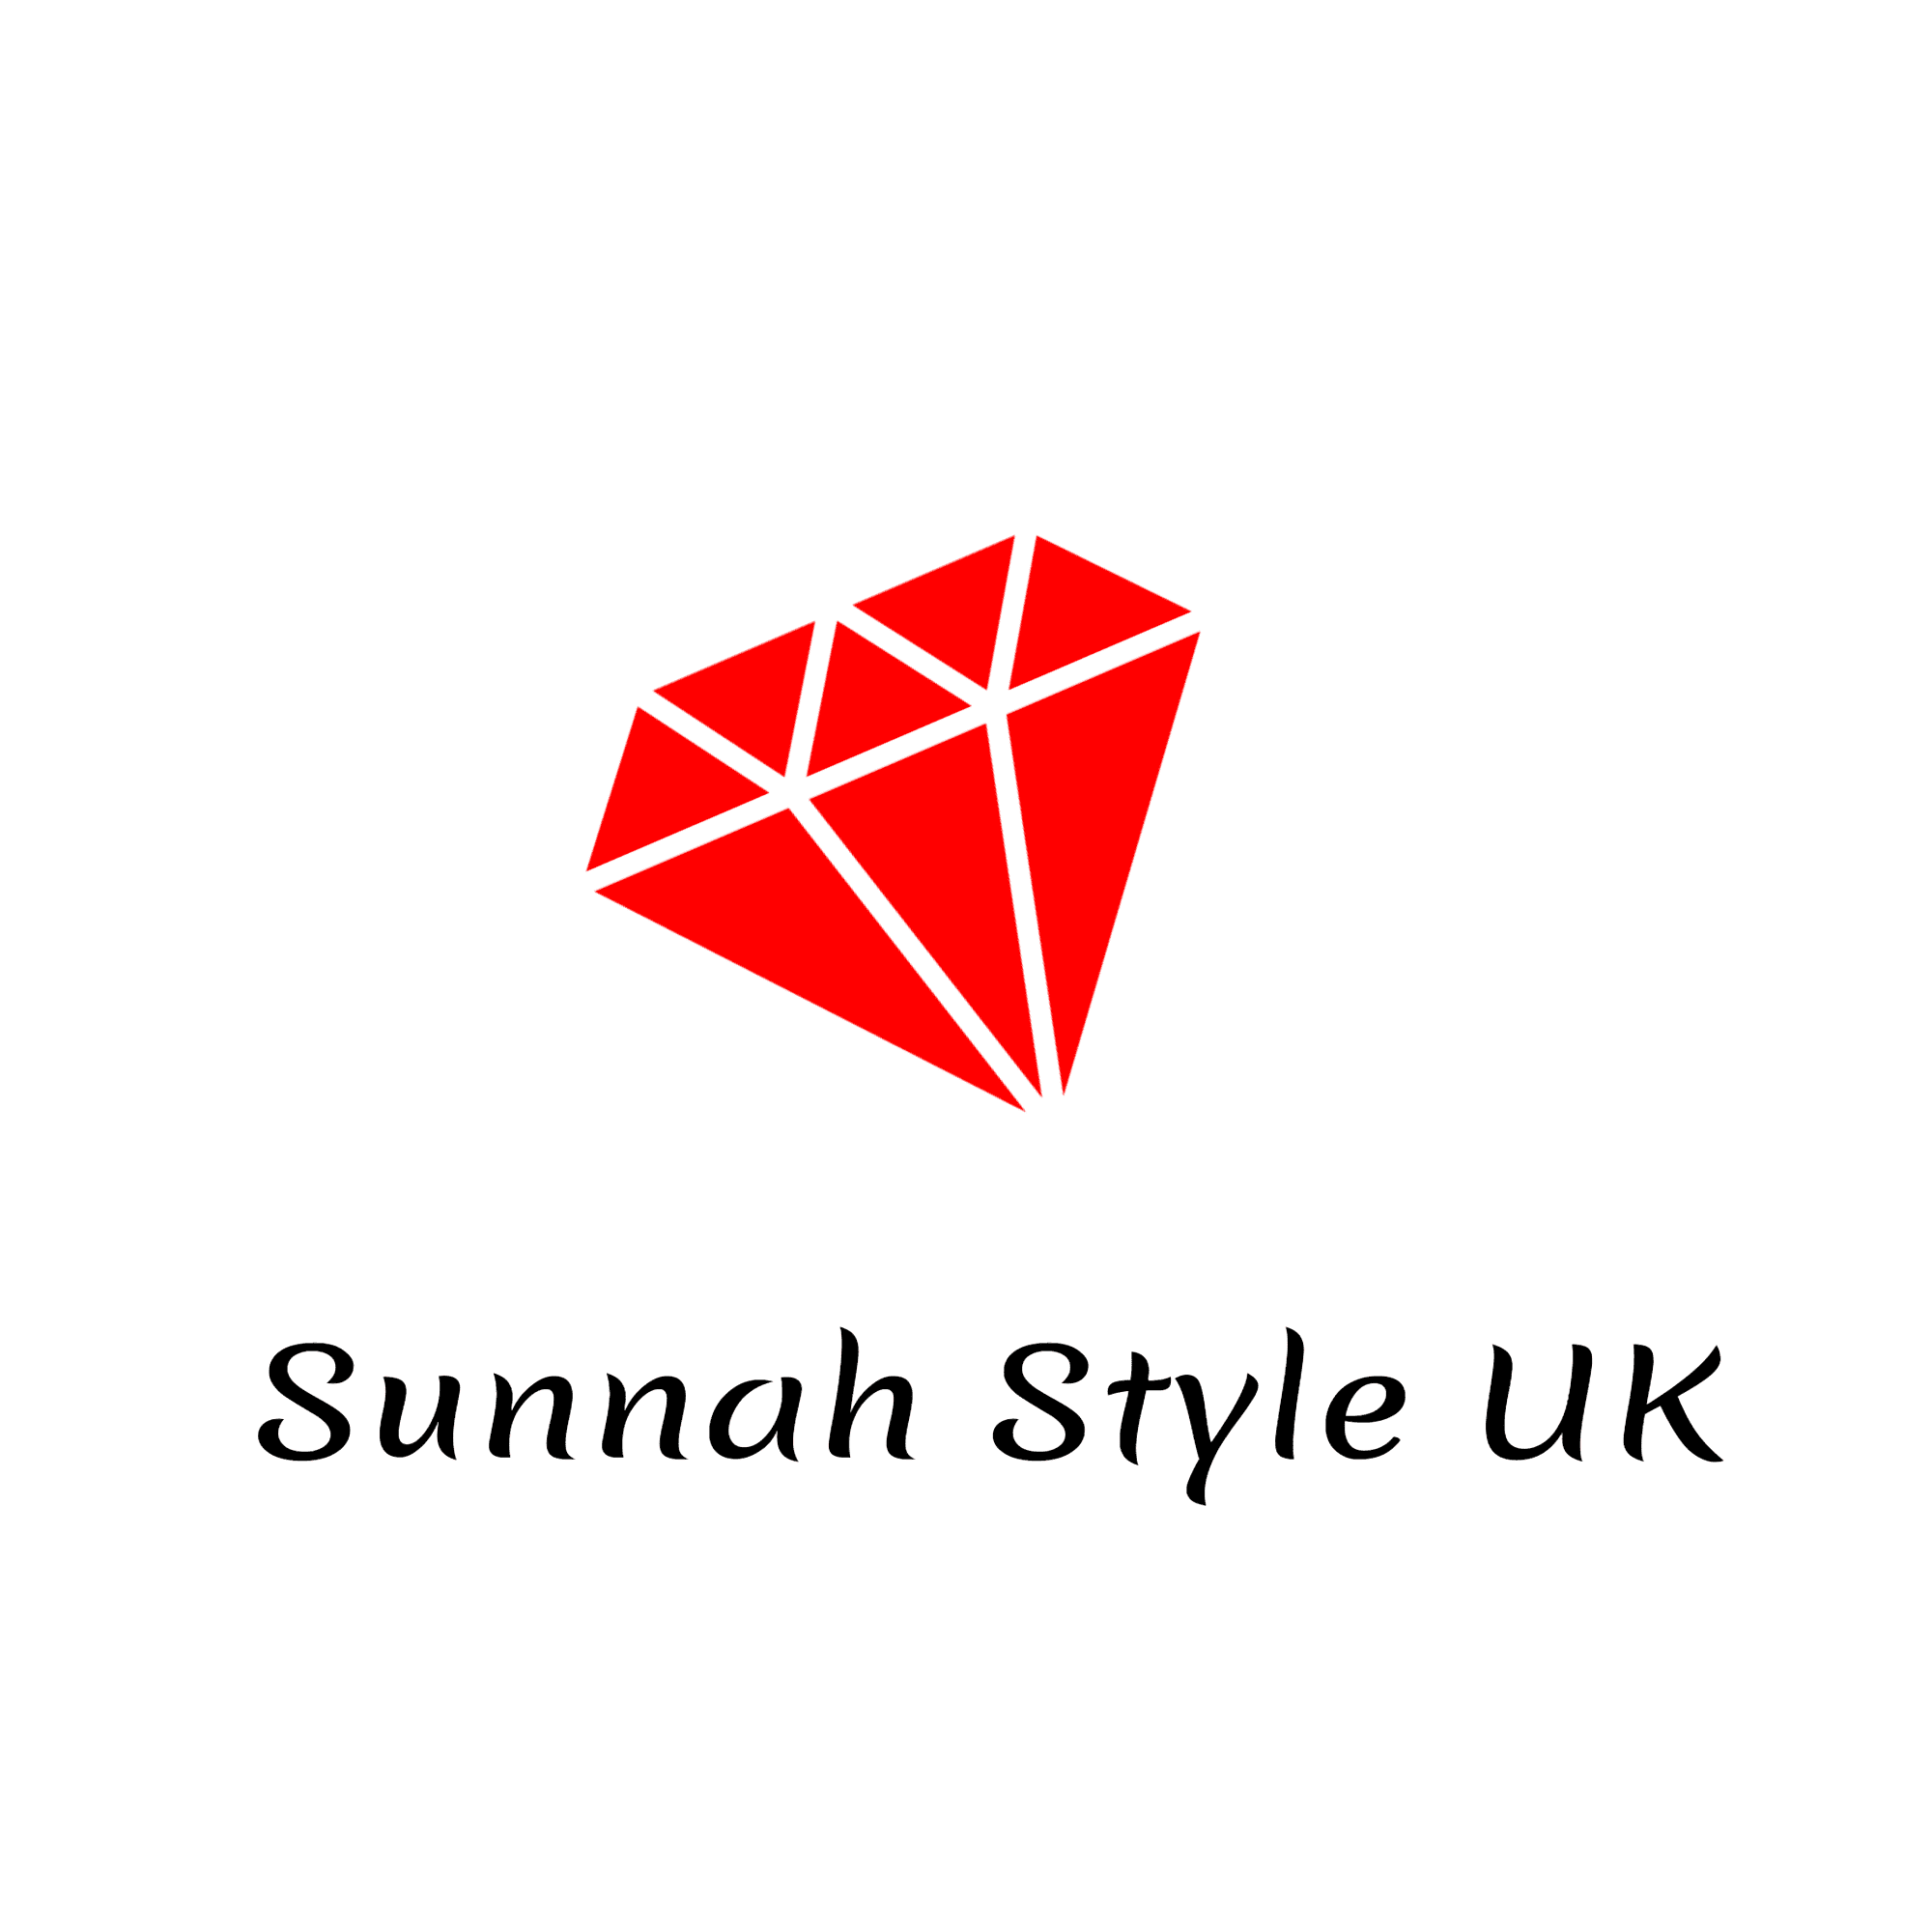 Sunnah Style Uk